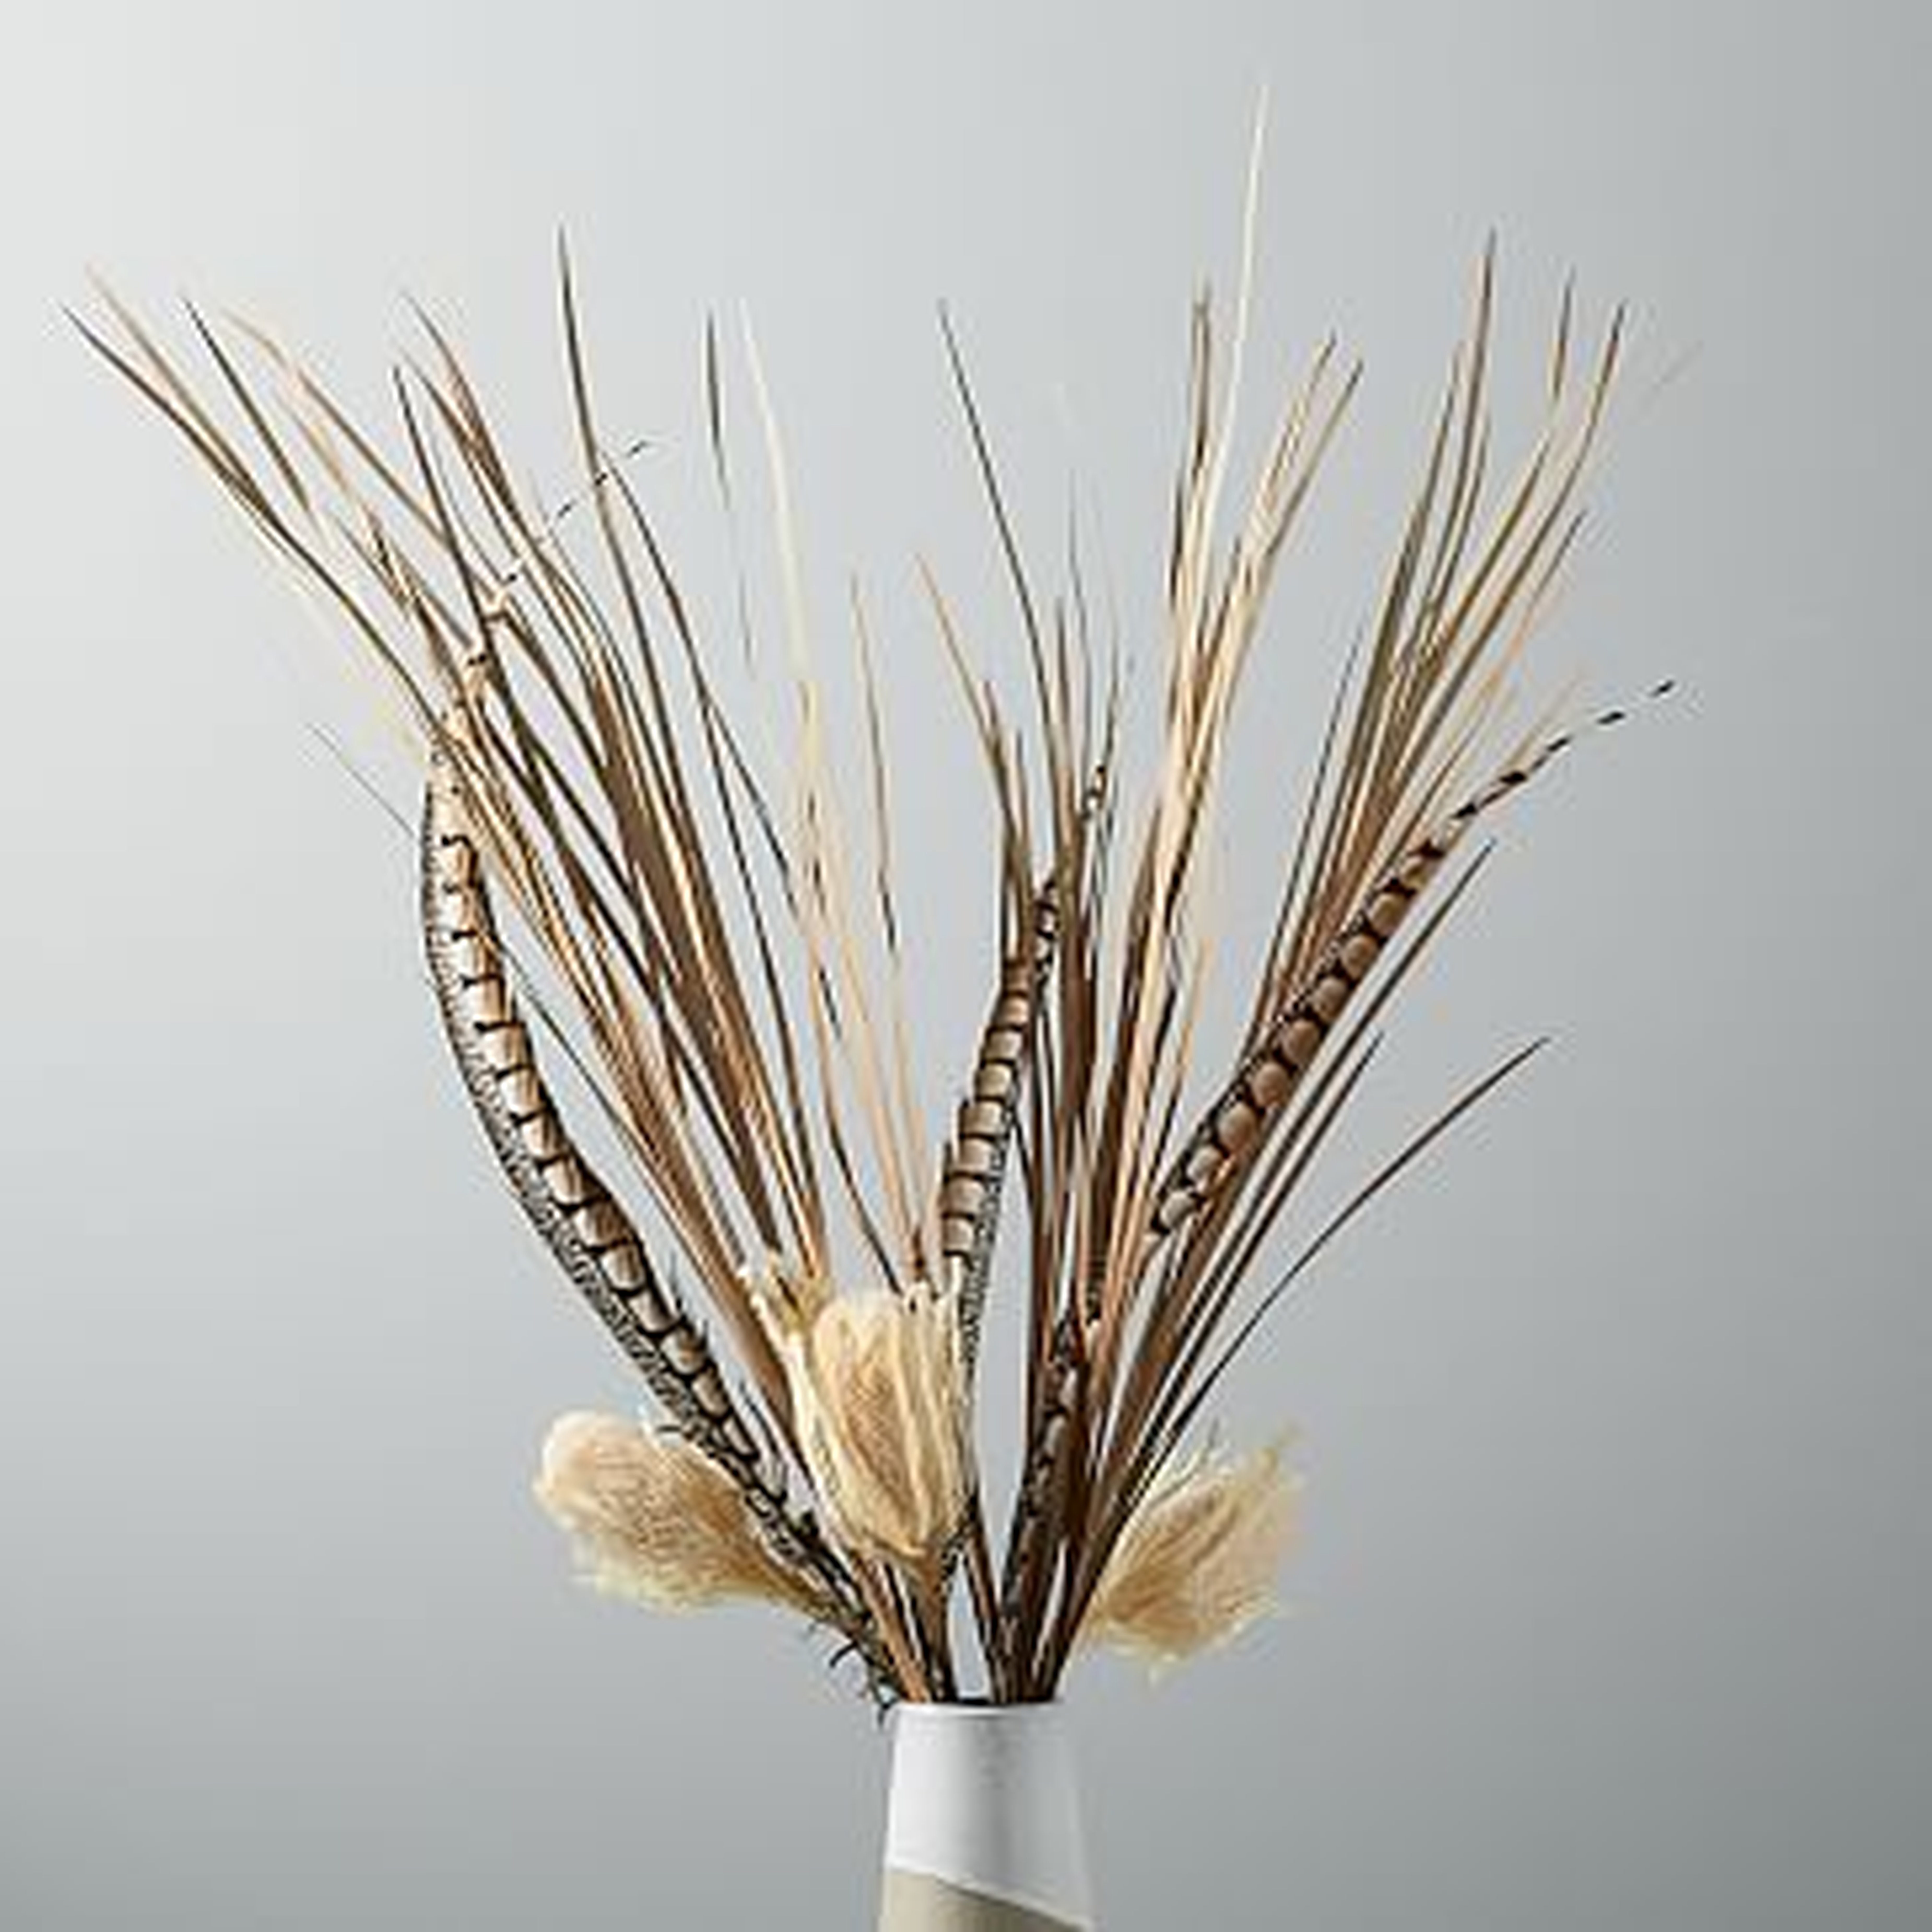 Metaflora Dried White Banksia + Grass + Feathers Bouquet - West Elm